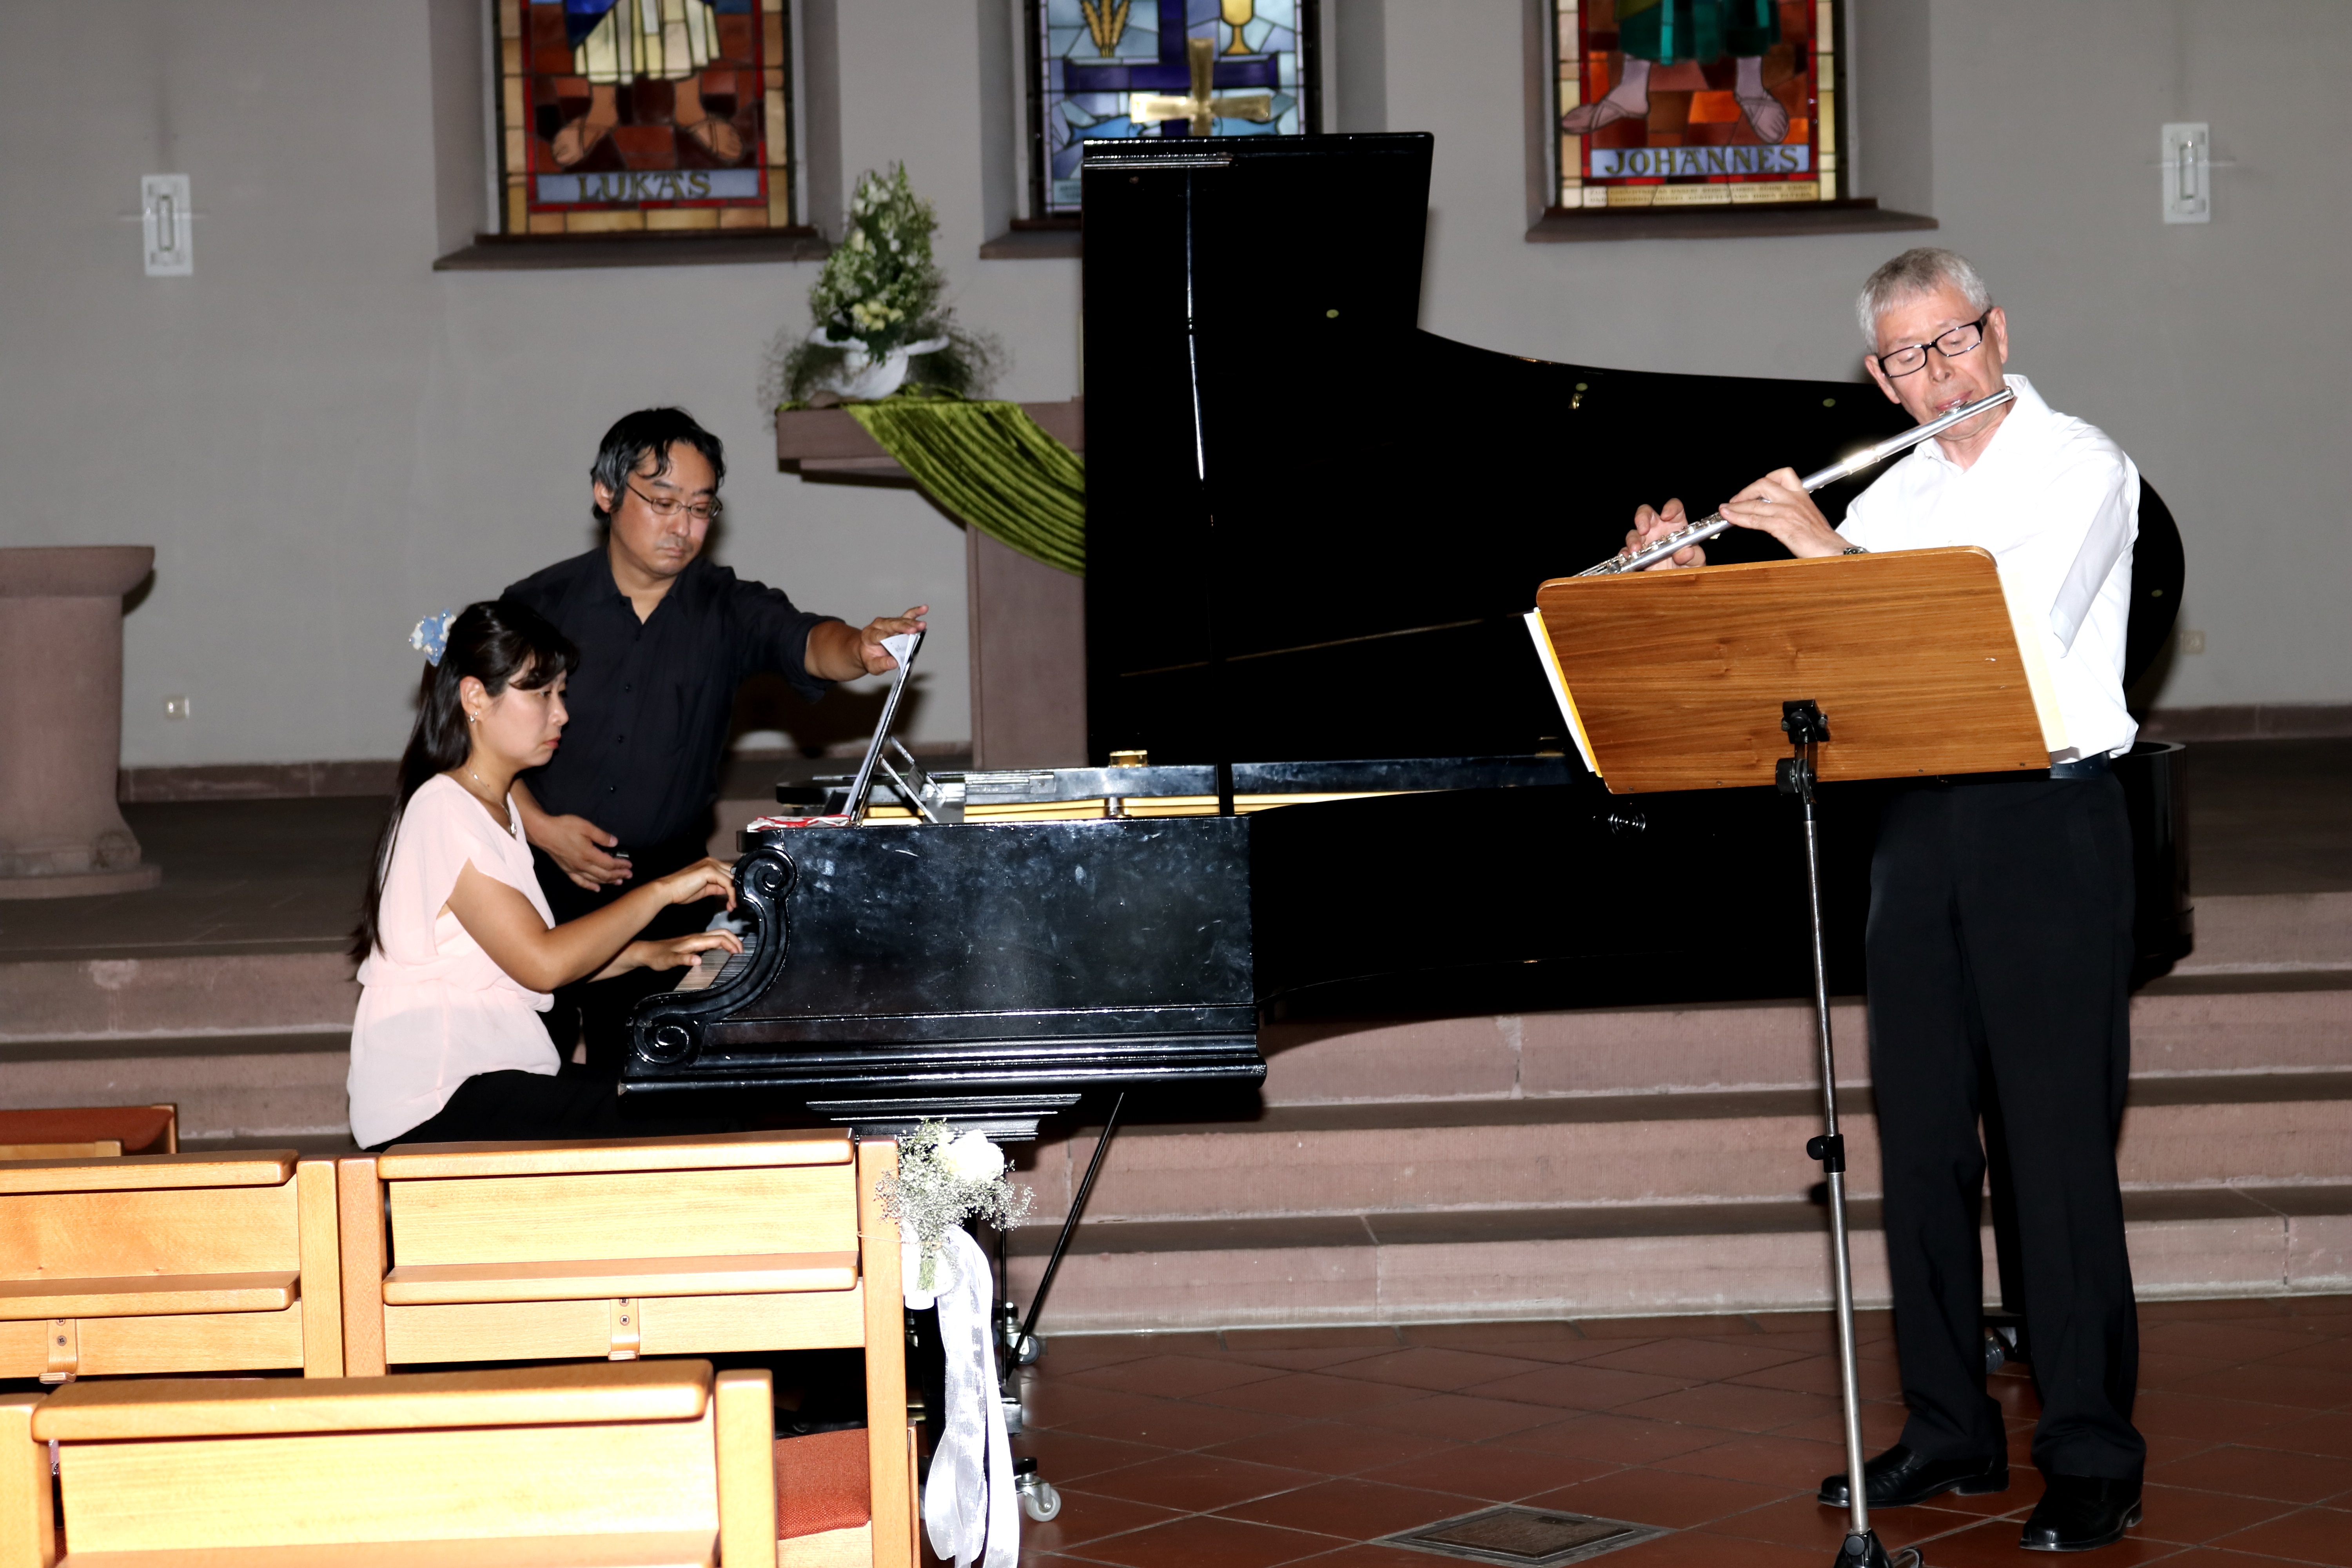  von links: Reiko Emura am Klavier, Makitaro Arima Sänger, Eberhard Blauth an der Flöte. 